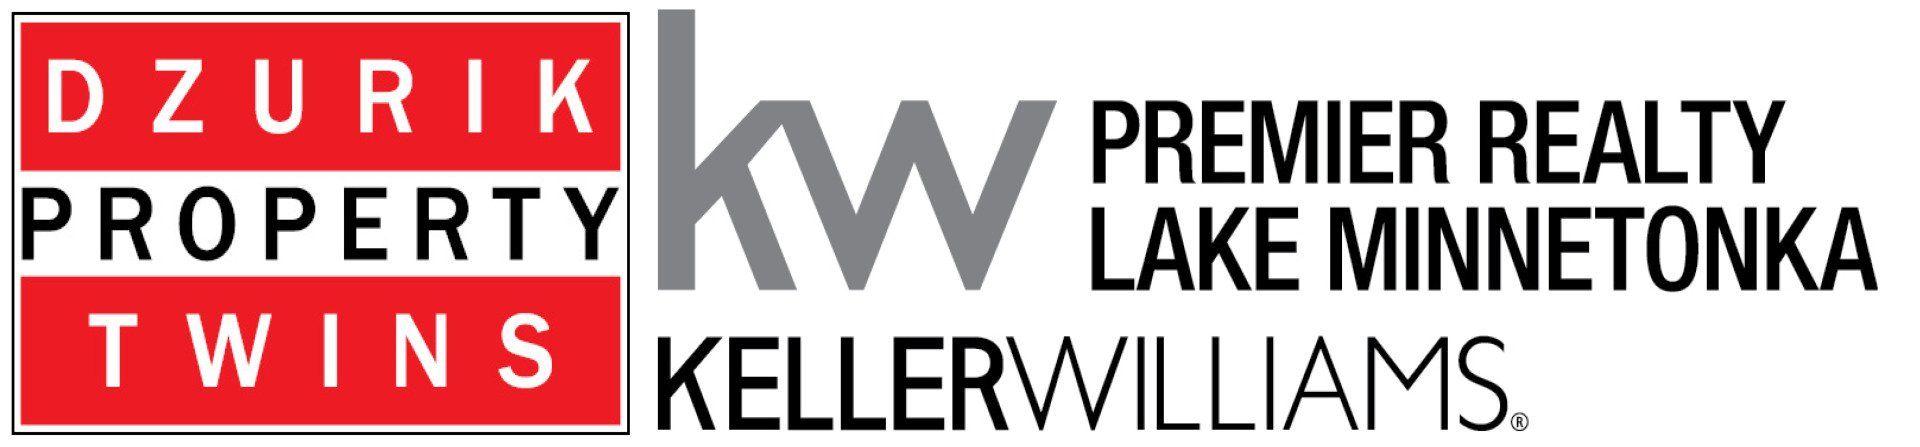 DZURIK PROPERTY TWINS Logo / KELLER WILLIAMS Logo